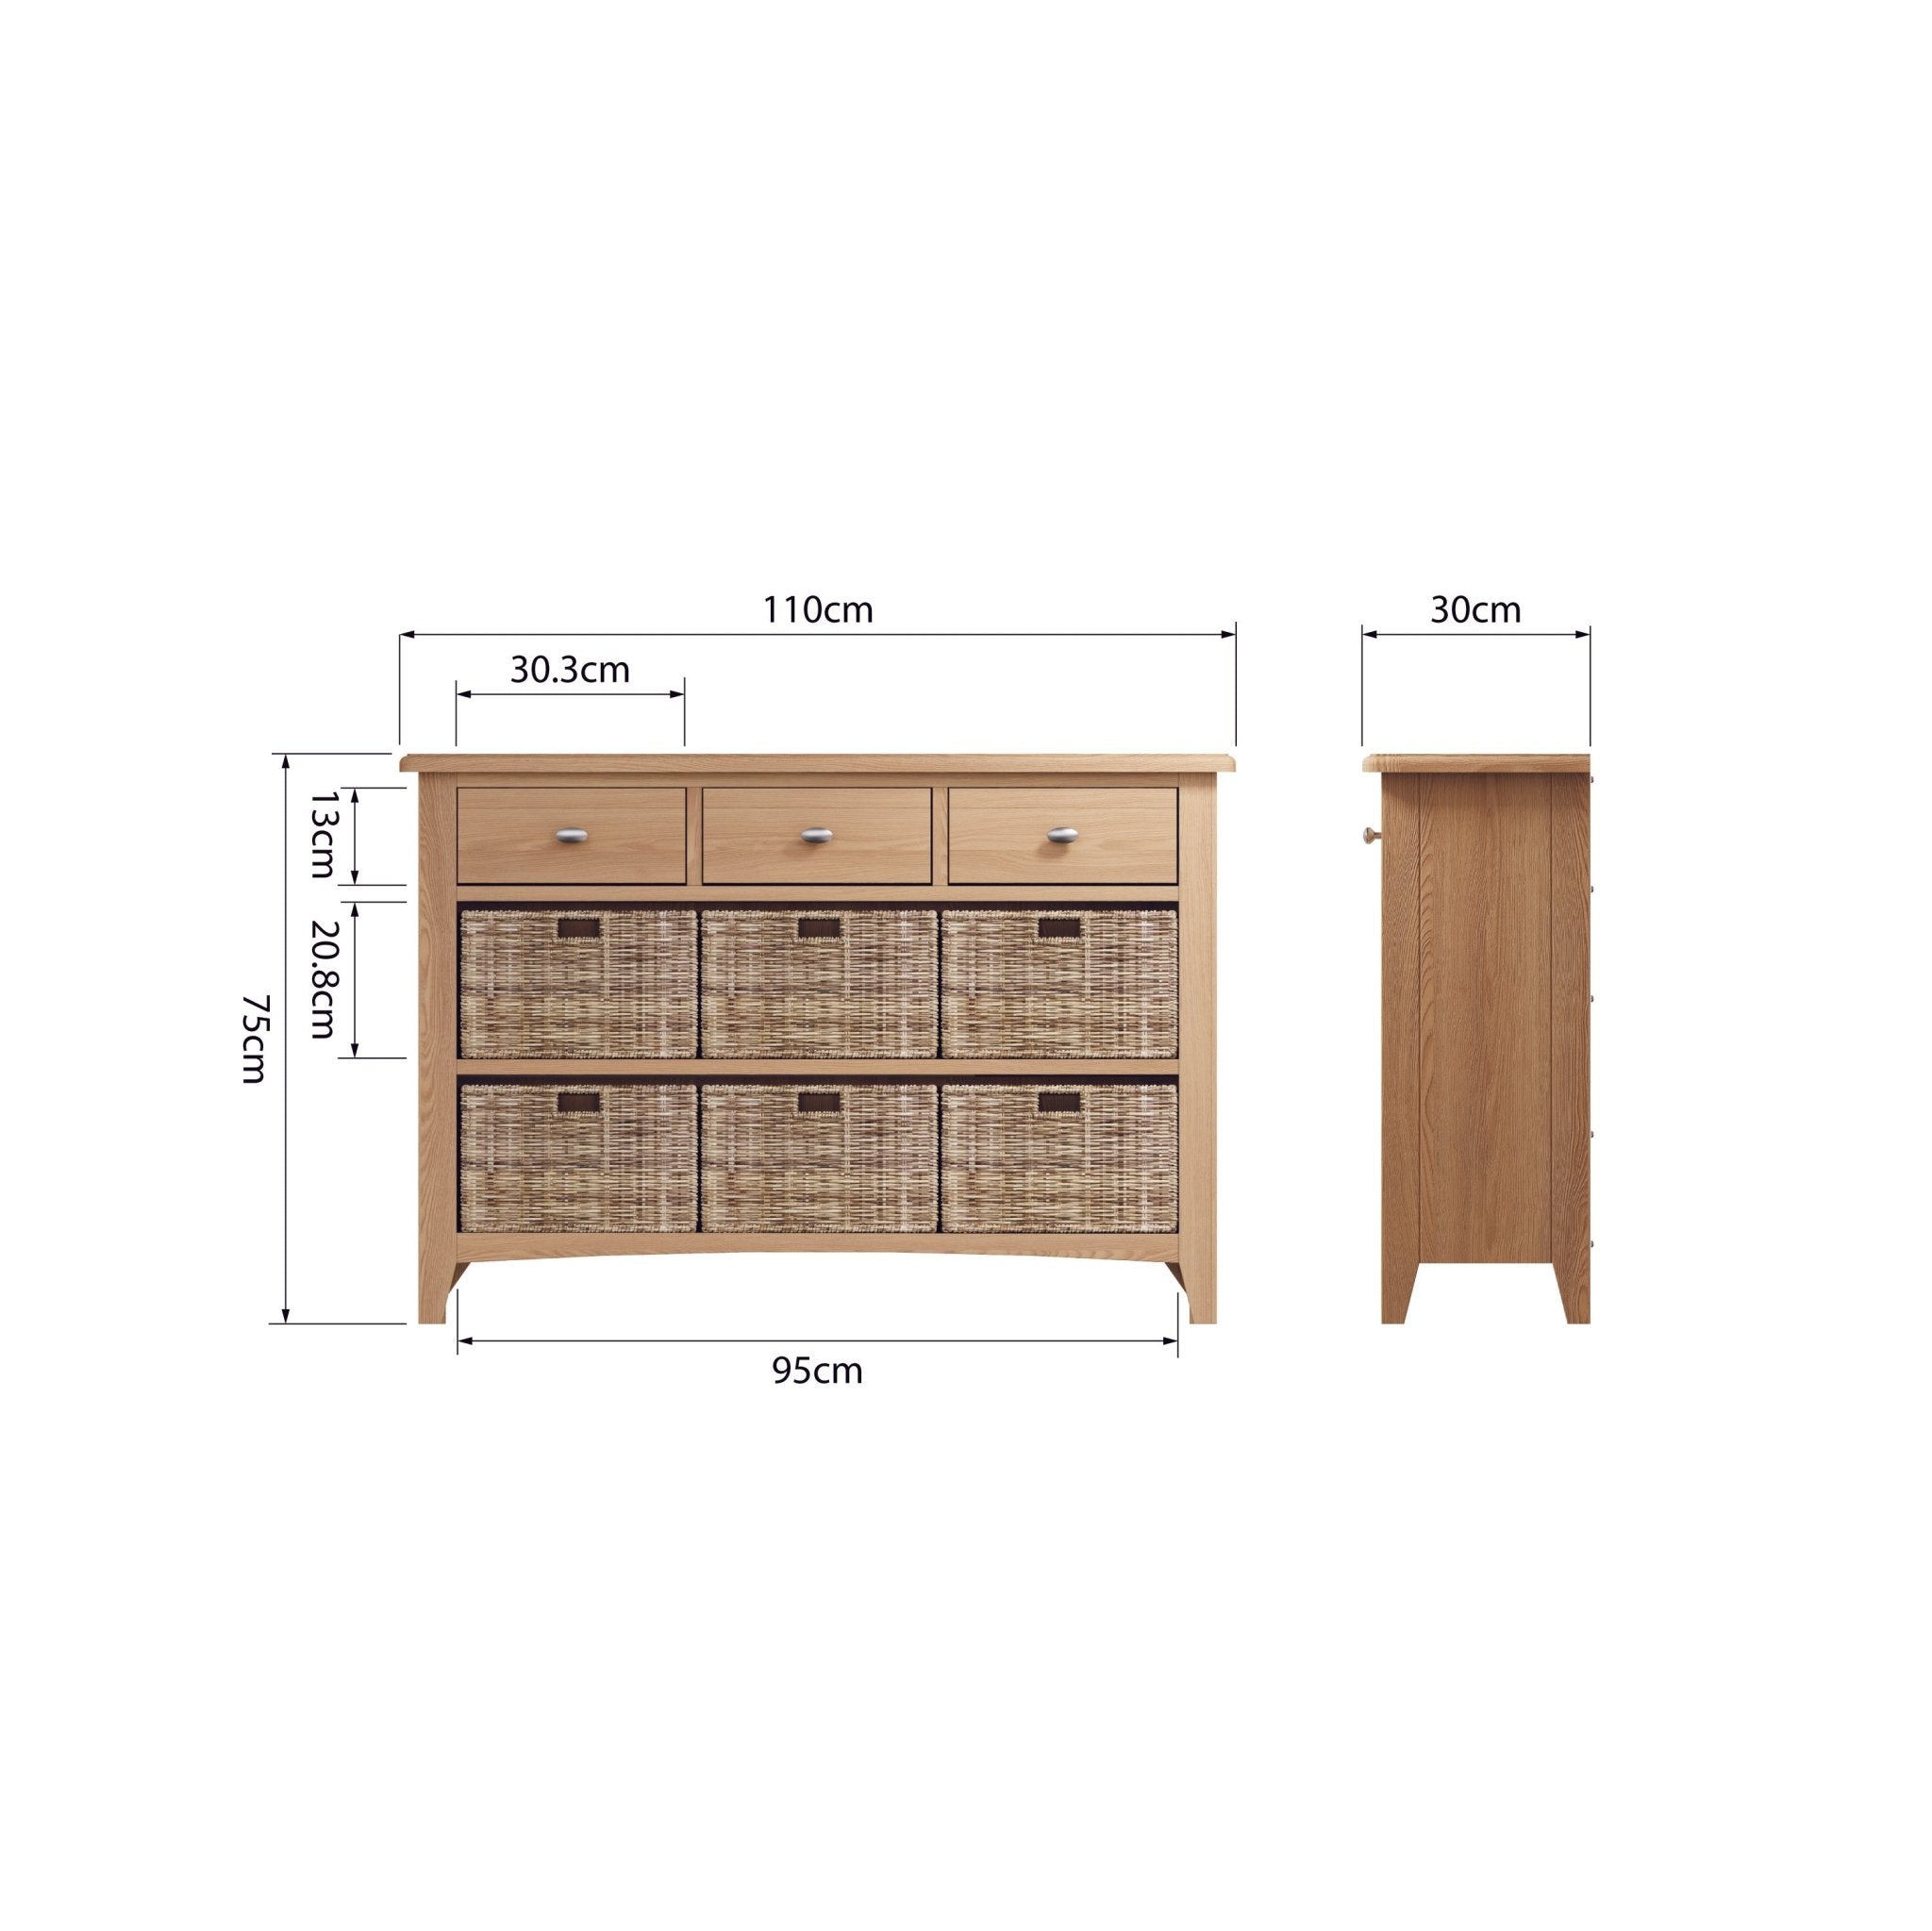 Ockley Oak 3 Drawer 6 Basket Cabinet - Duck Barn Interiors